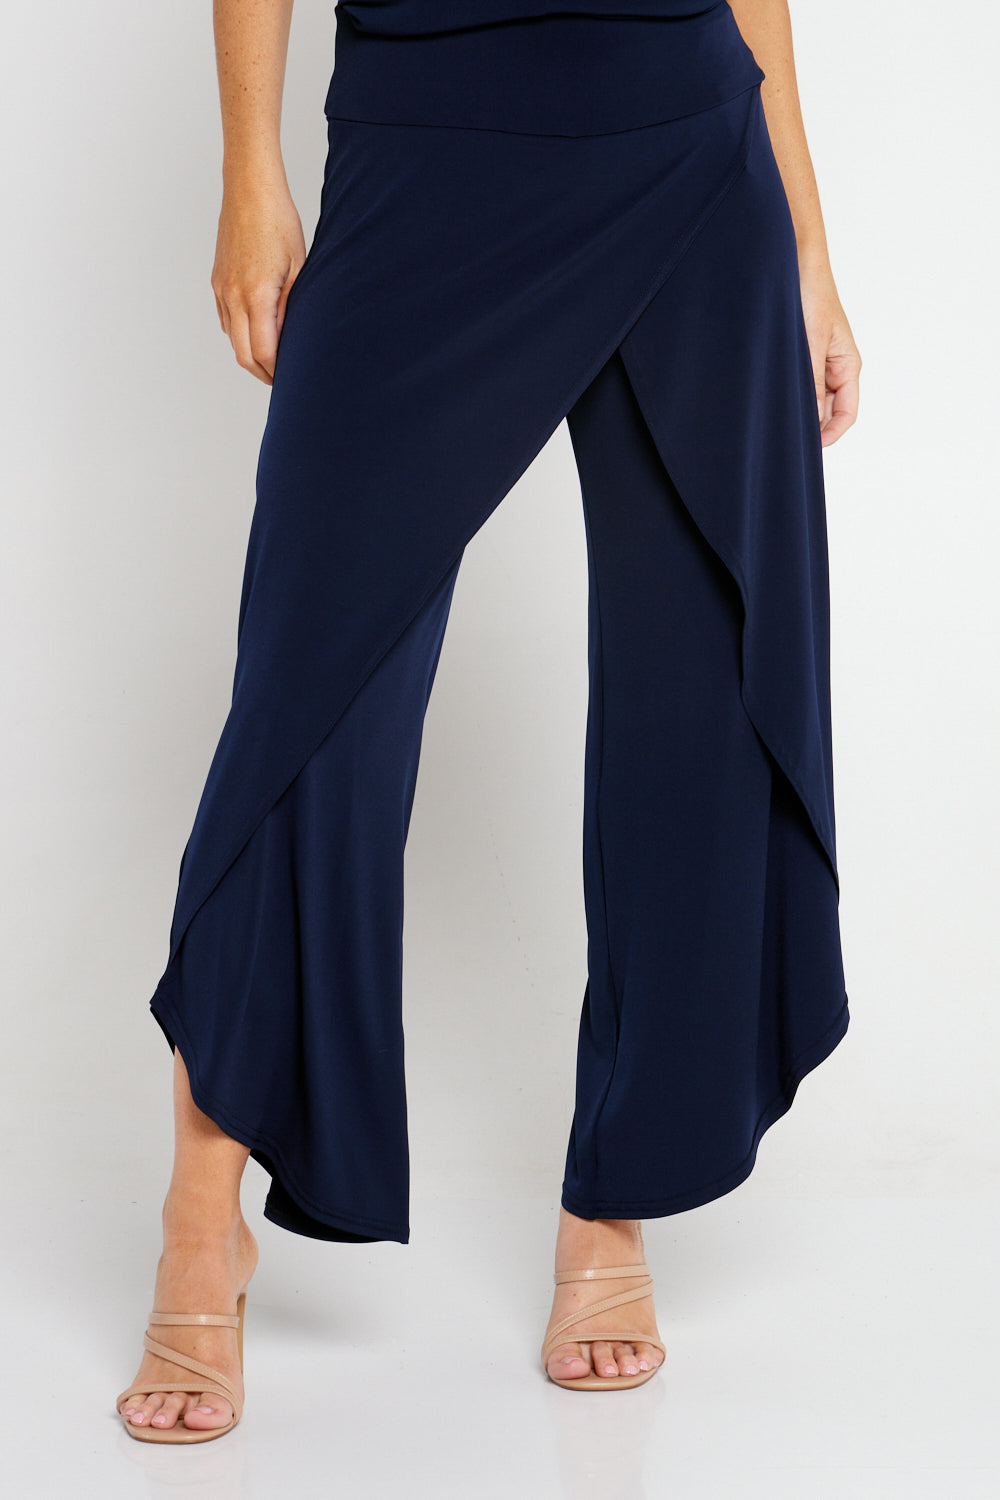 TULIO for Mature Fashion | Madalynn Pants - Black | Australian Made ...